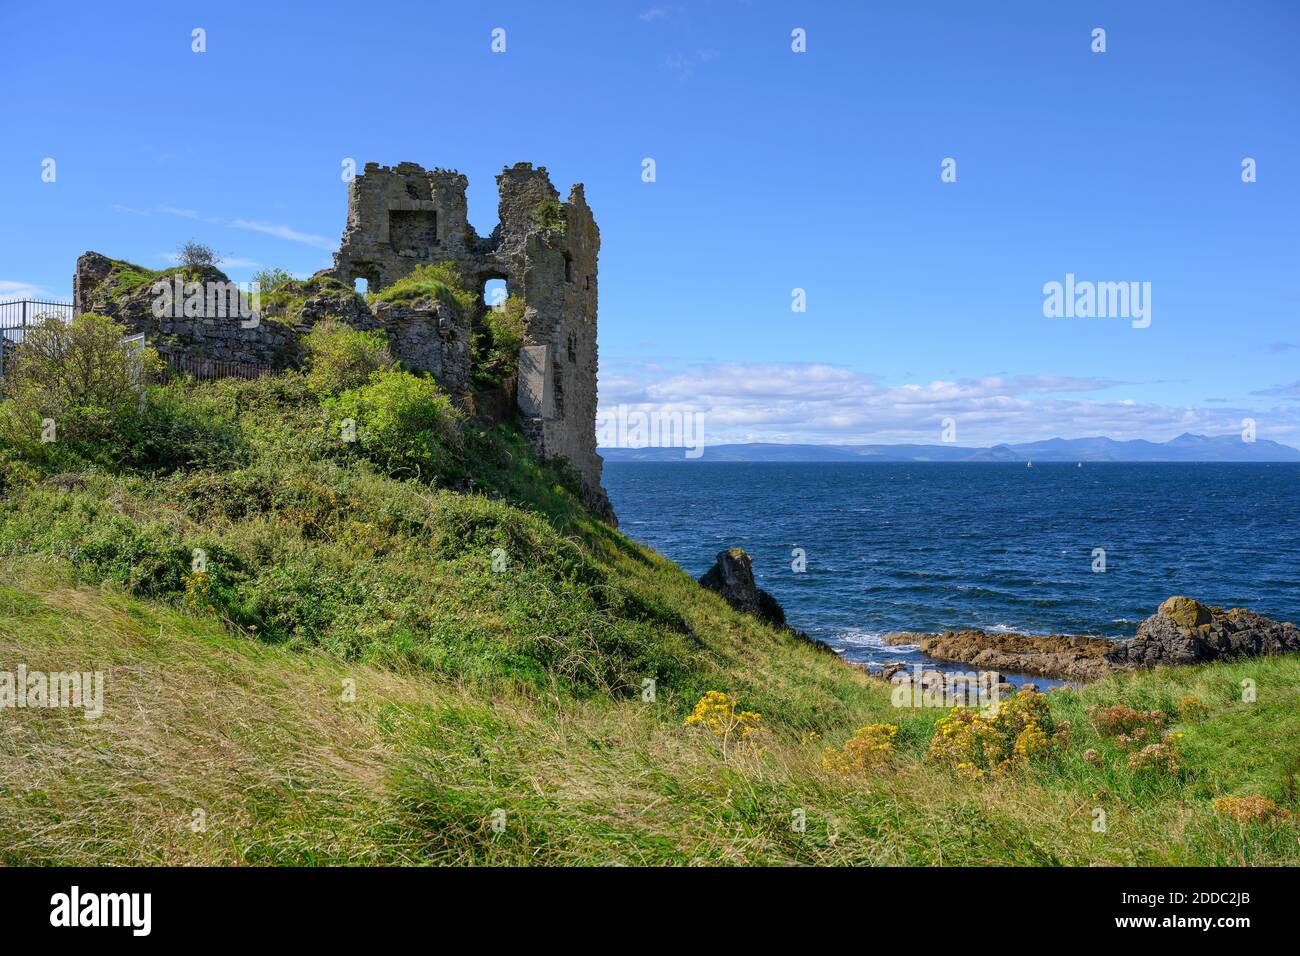 UK, Scotland, Ruins of Dunure Castle with Irish Sea in background Stock Photo